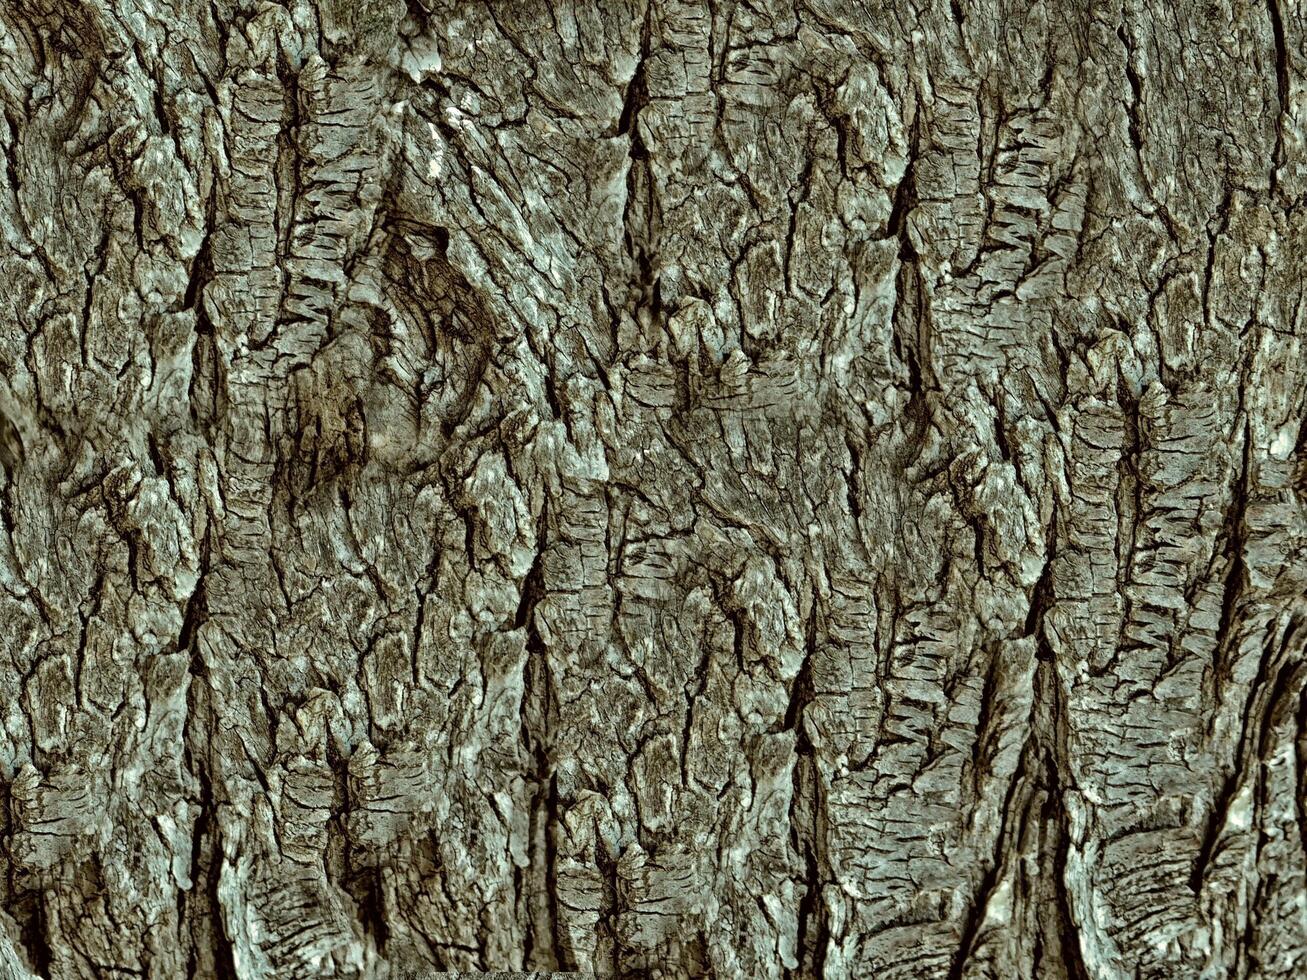 brun trä textur foto